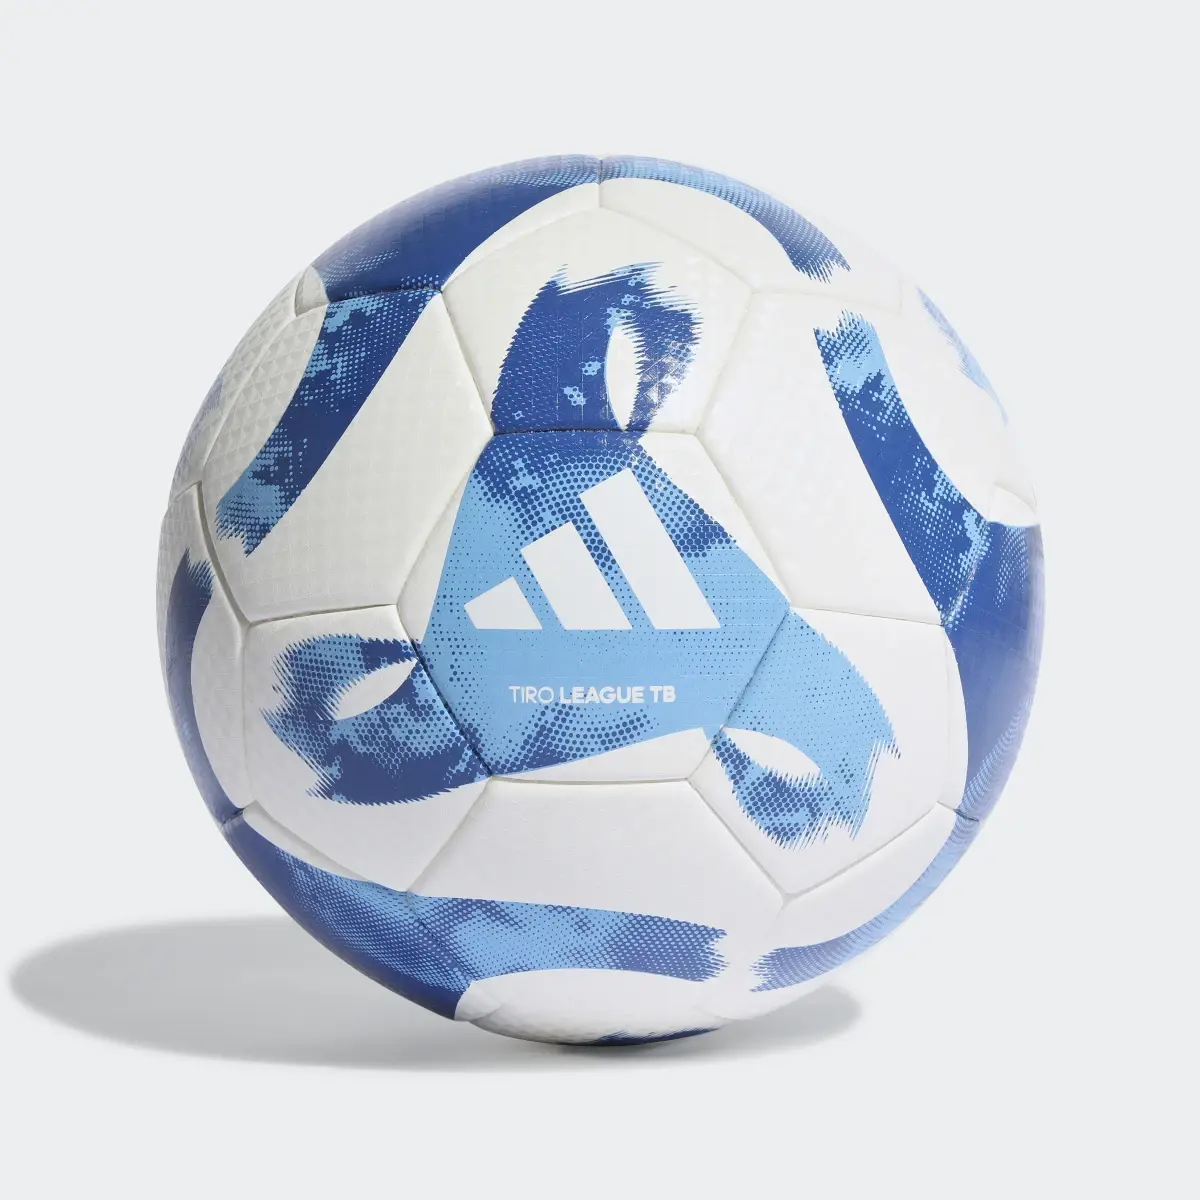 Adidas Tiro League Thermally Bonded Ball. 2